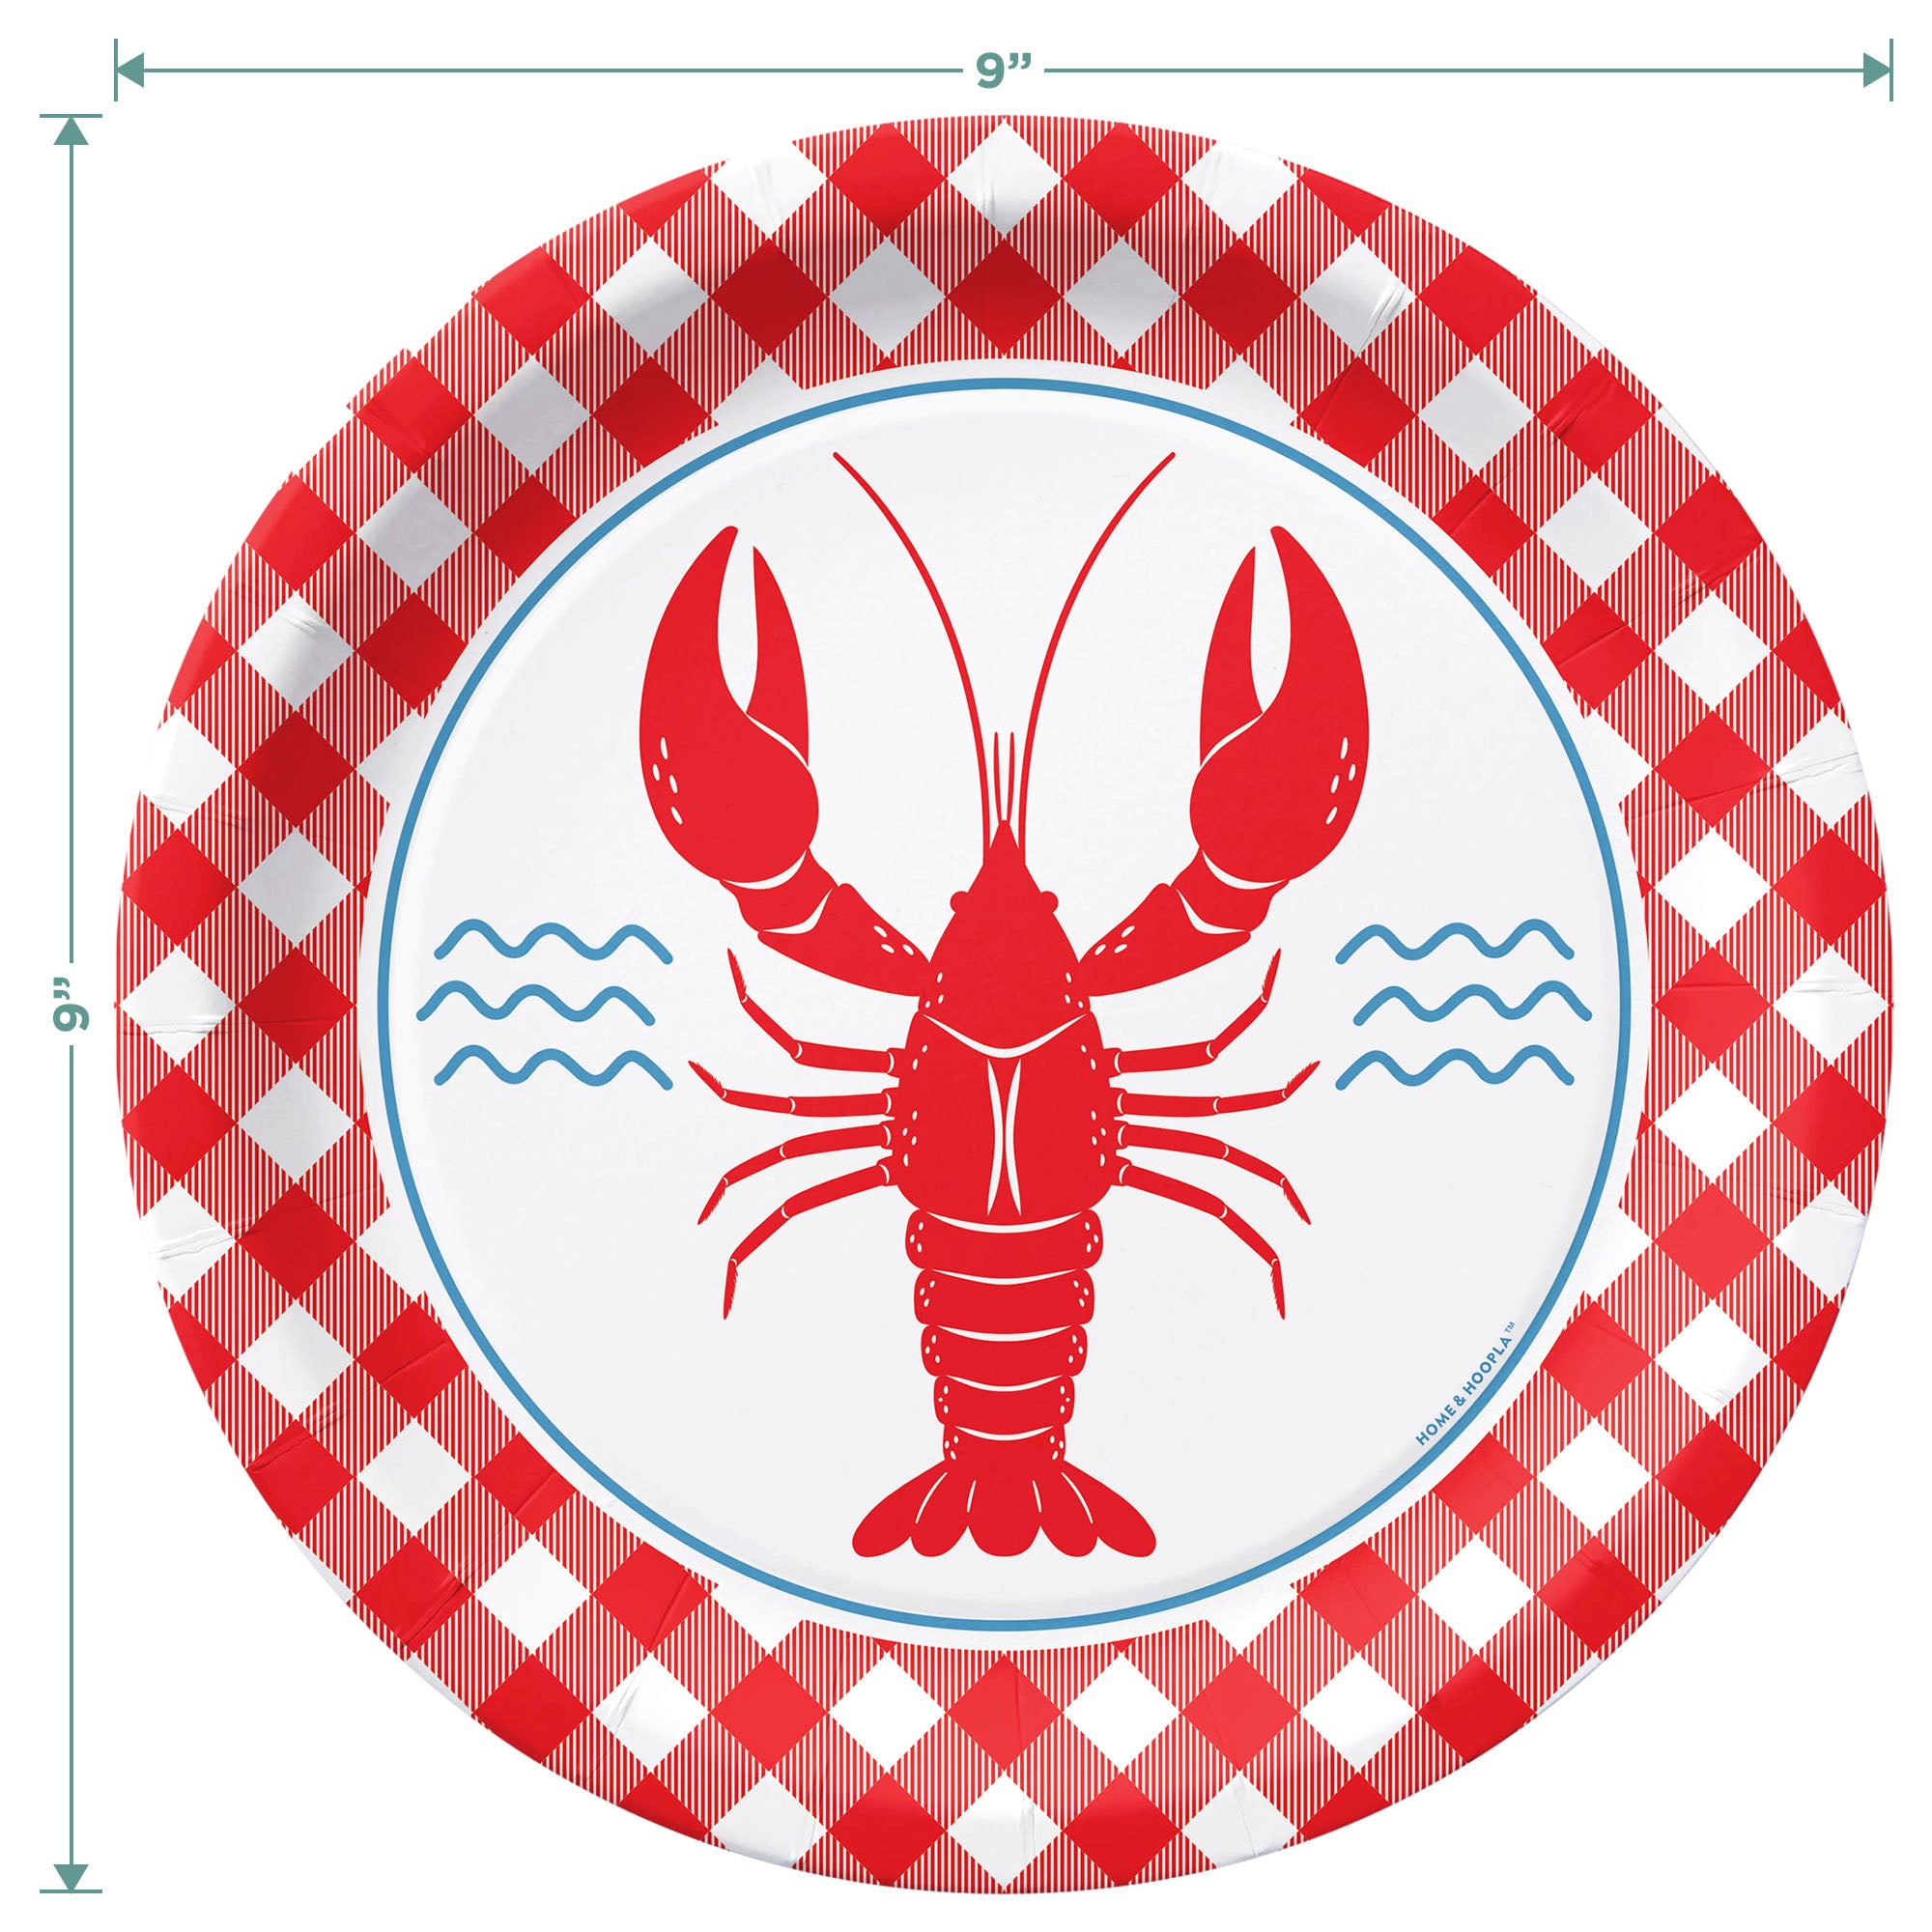 APOWBLS Crawfish Boil Party Supplies - Lobster Theme Plates & Napkins Party  Supplies, Plate, Cup, Napkin, Crayfish Crab Seafood Shrimp Boil Theme